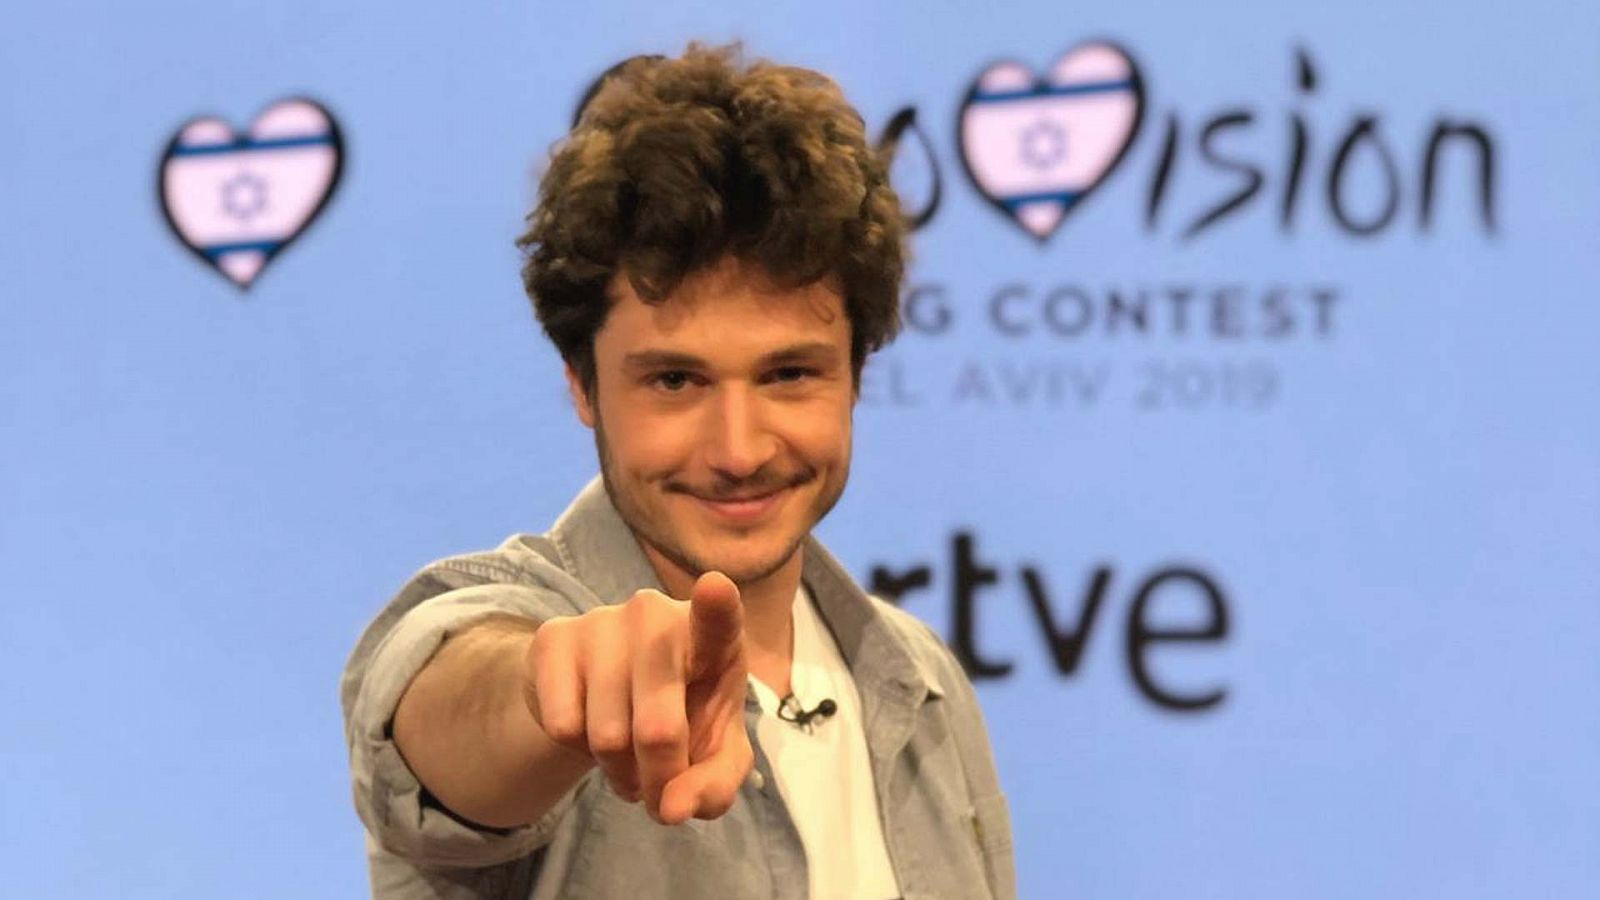 Así ha sido la rueda de prensa de Miki, representante de España en Eurovisión 2019